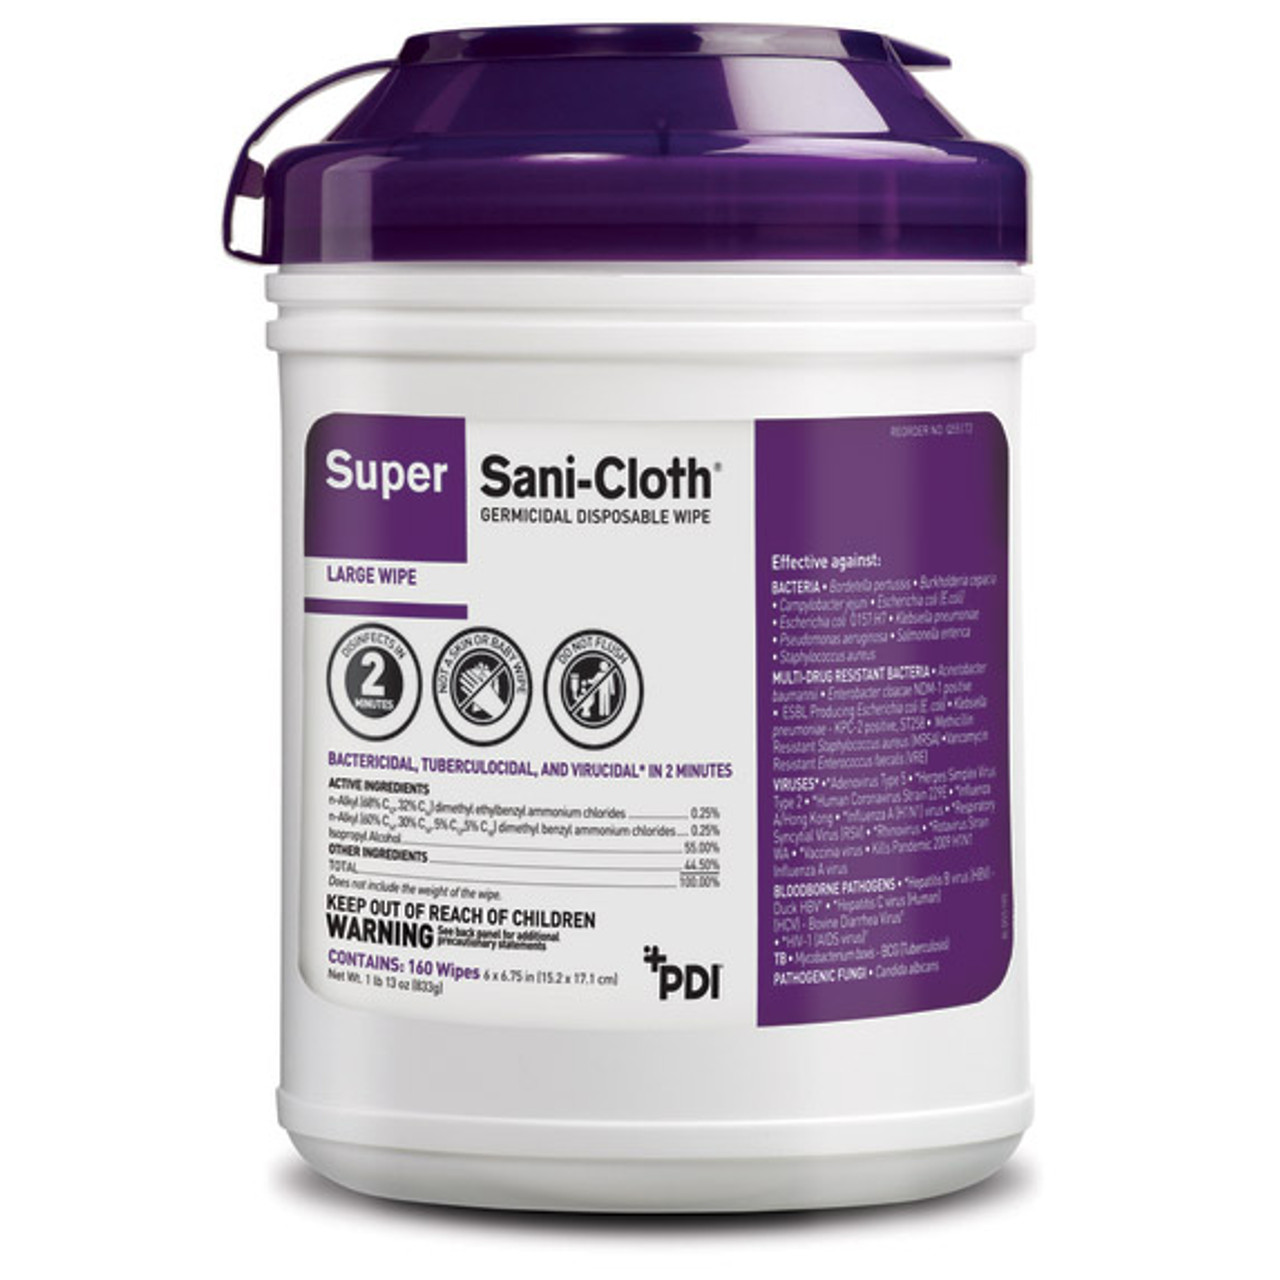 Super Sani-Cloth Germicidal Disposable Wipe